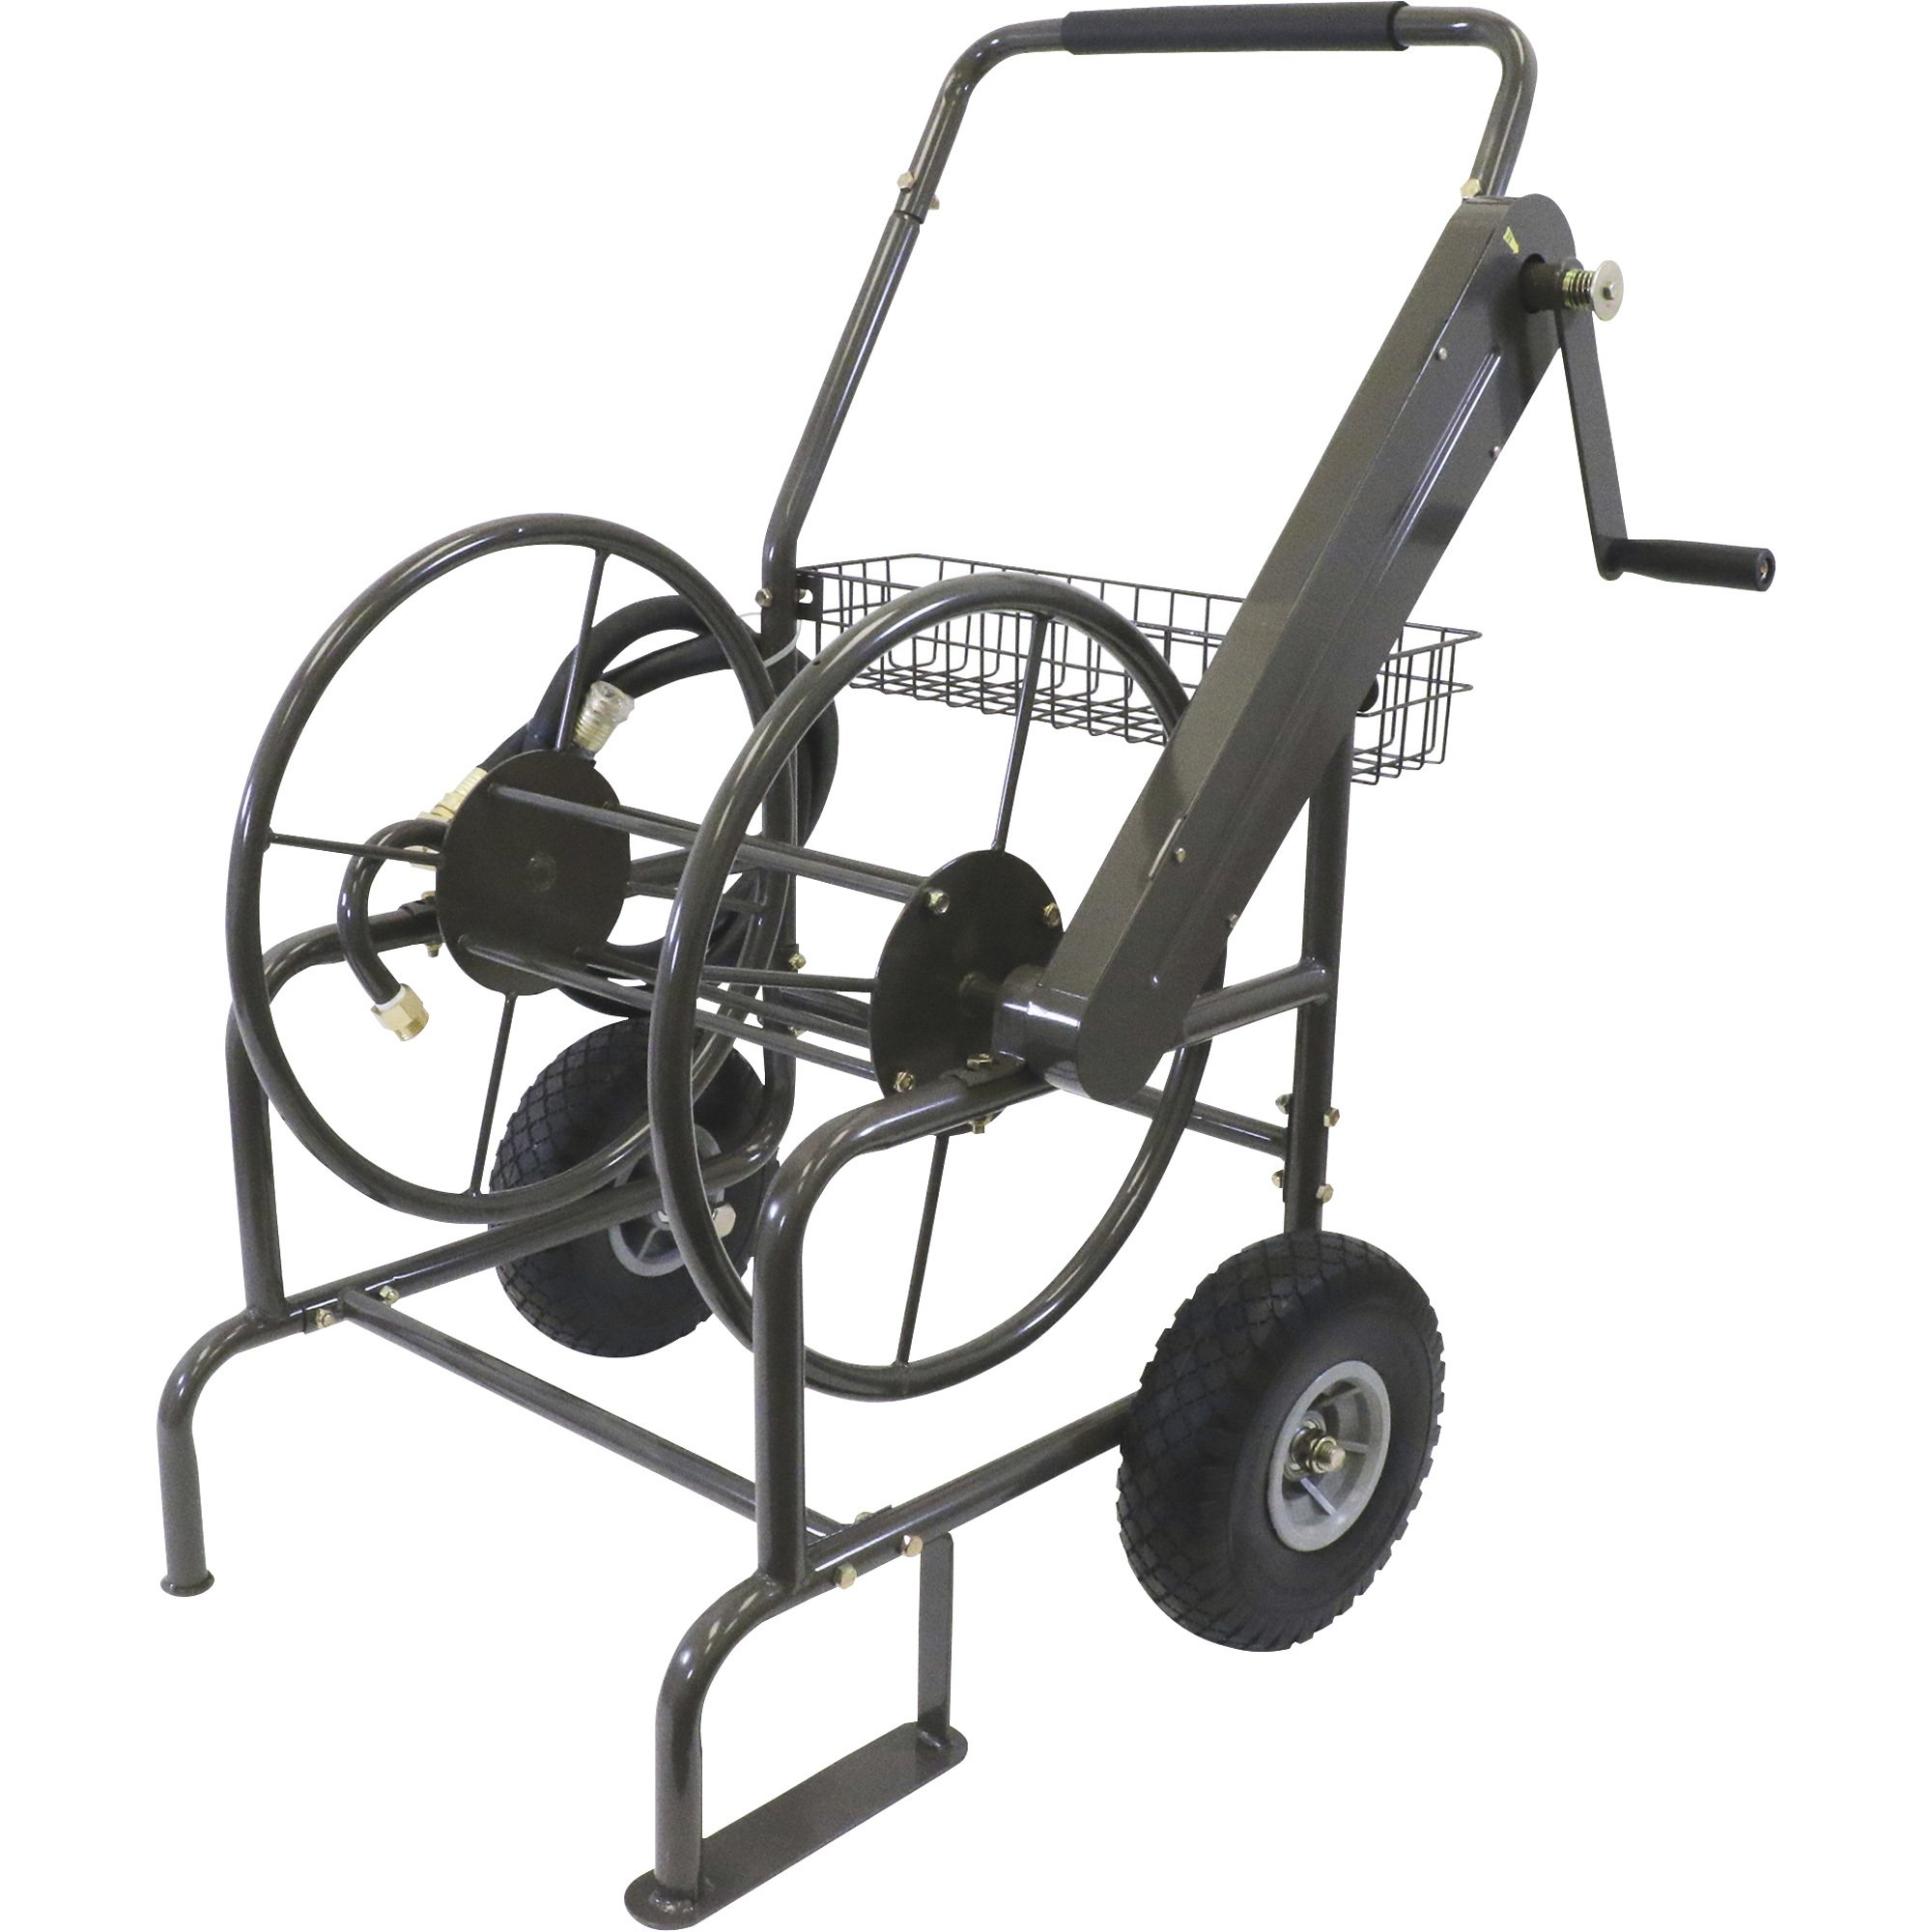 Milwaukee Industrial Garden Hose Reel Cart — Holds 250-Ft. of Hose